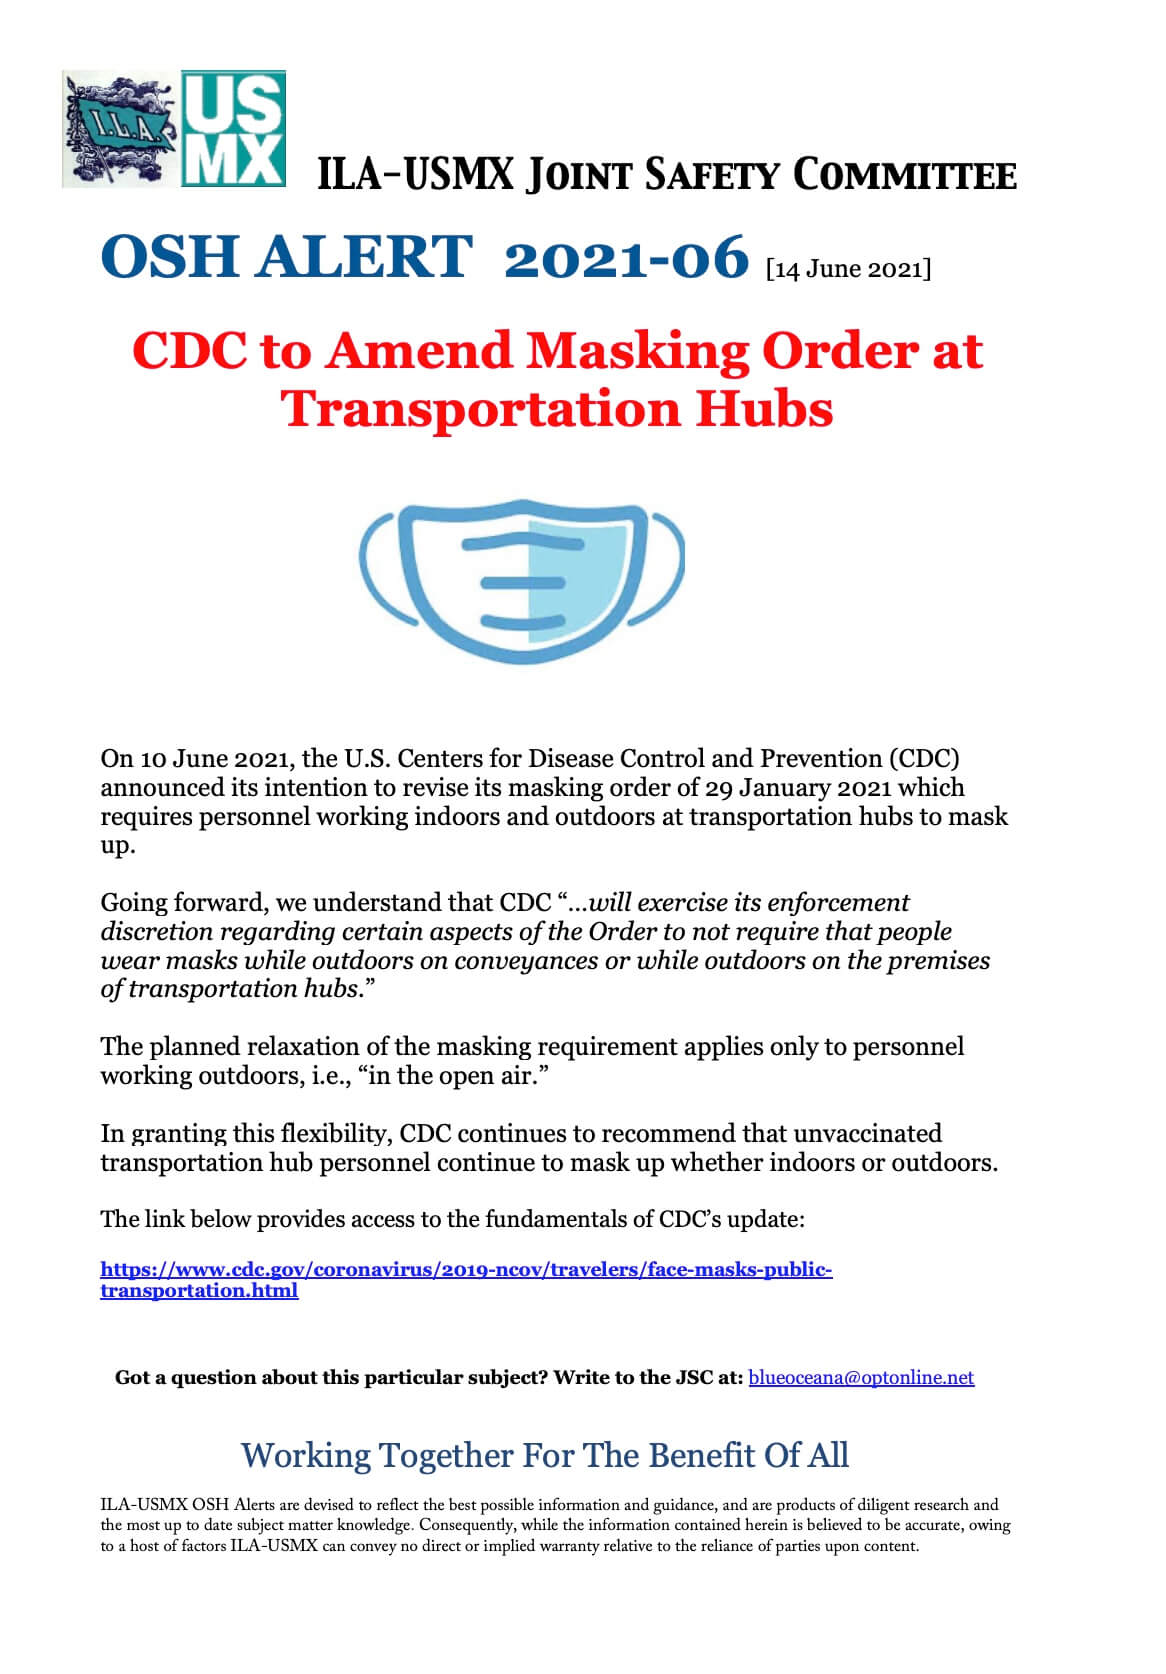 OSH Alert 2021-06 Mask Amendment